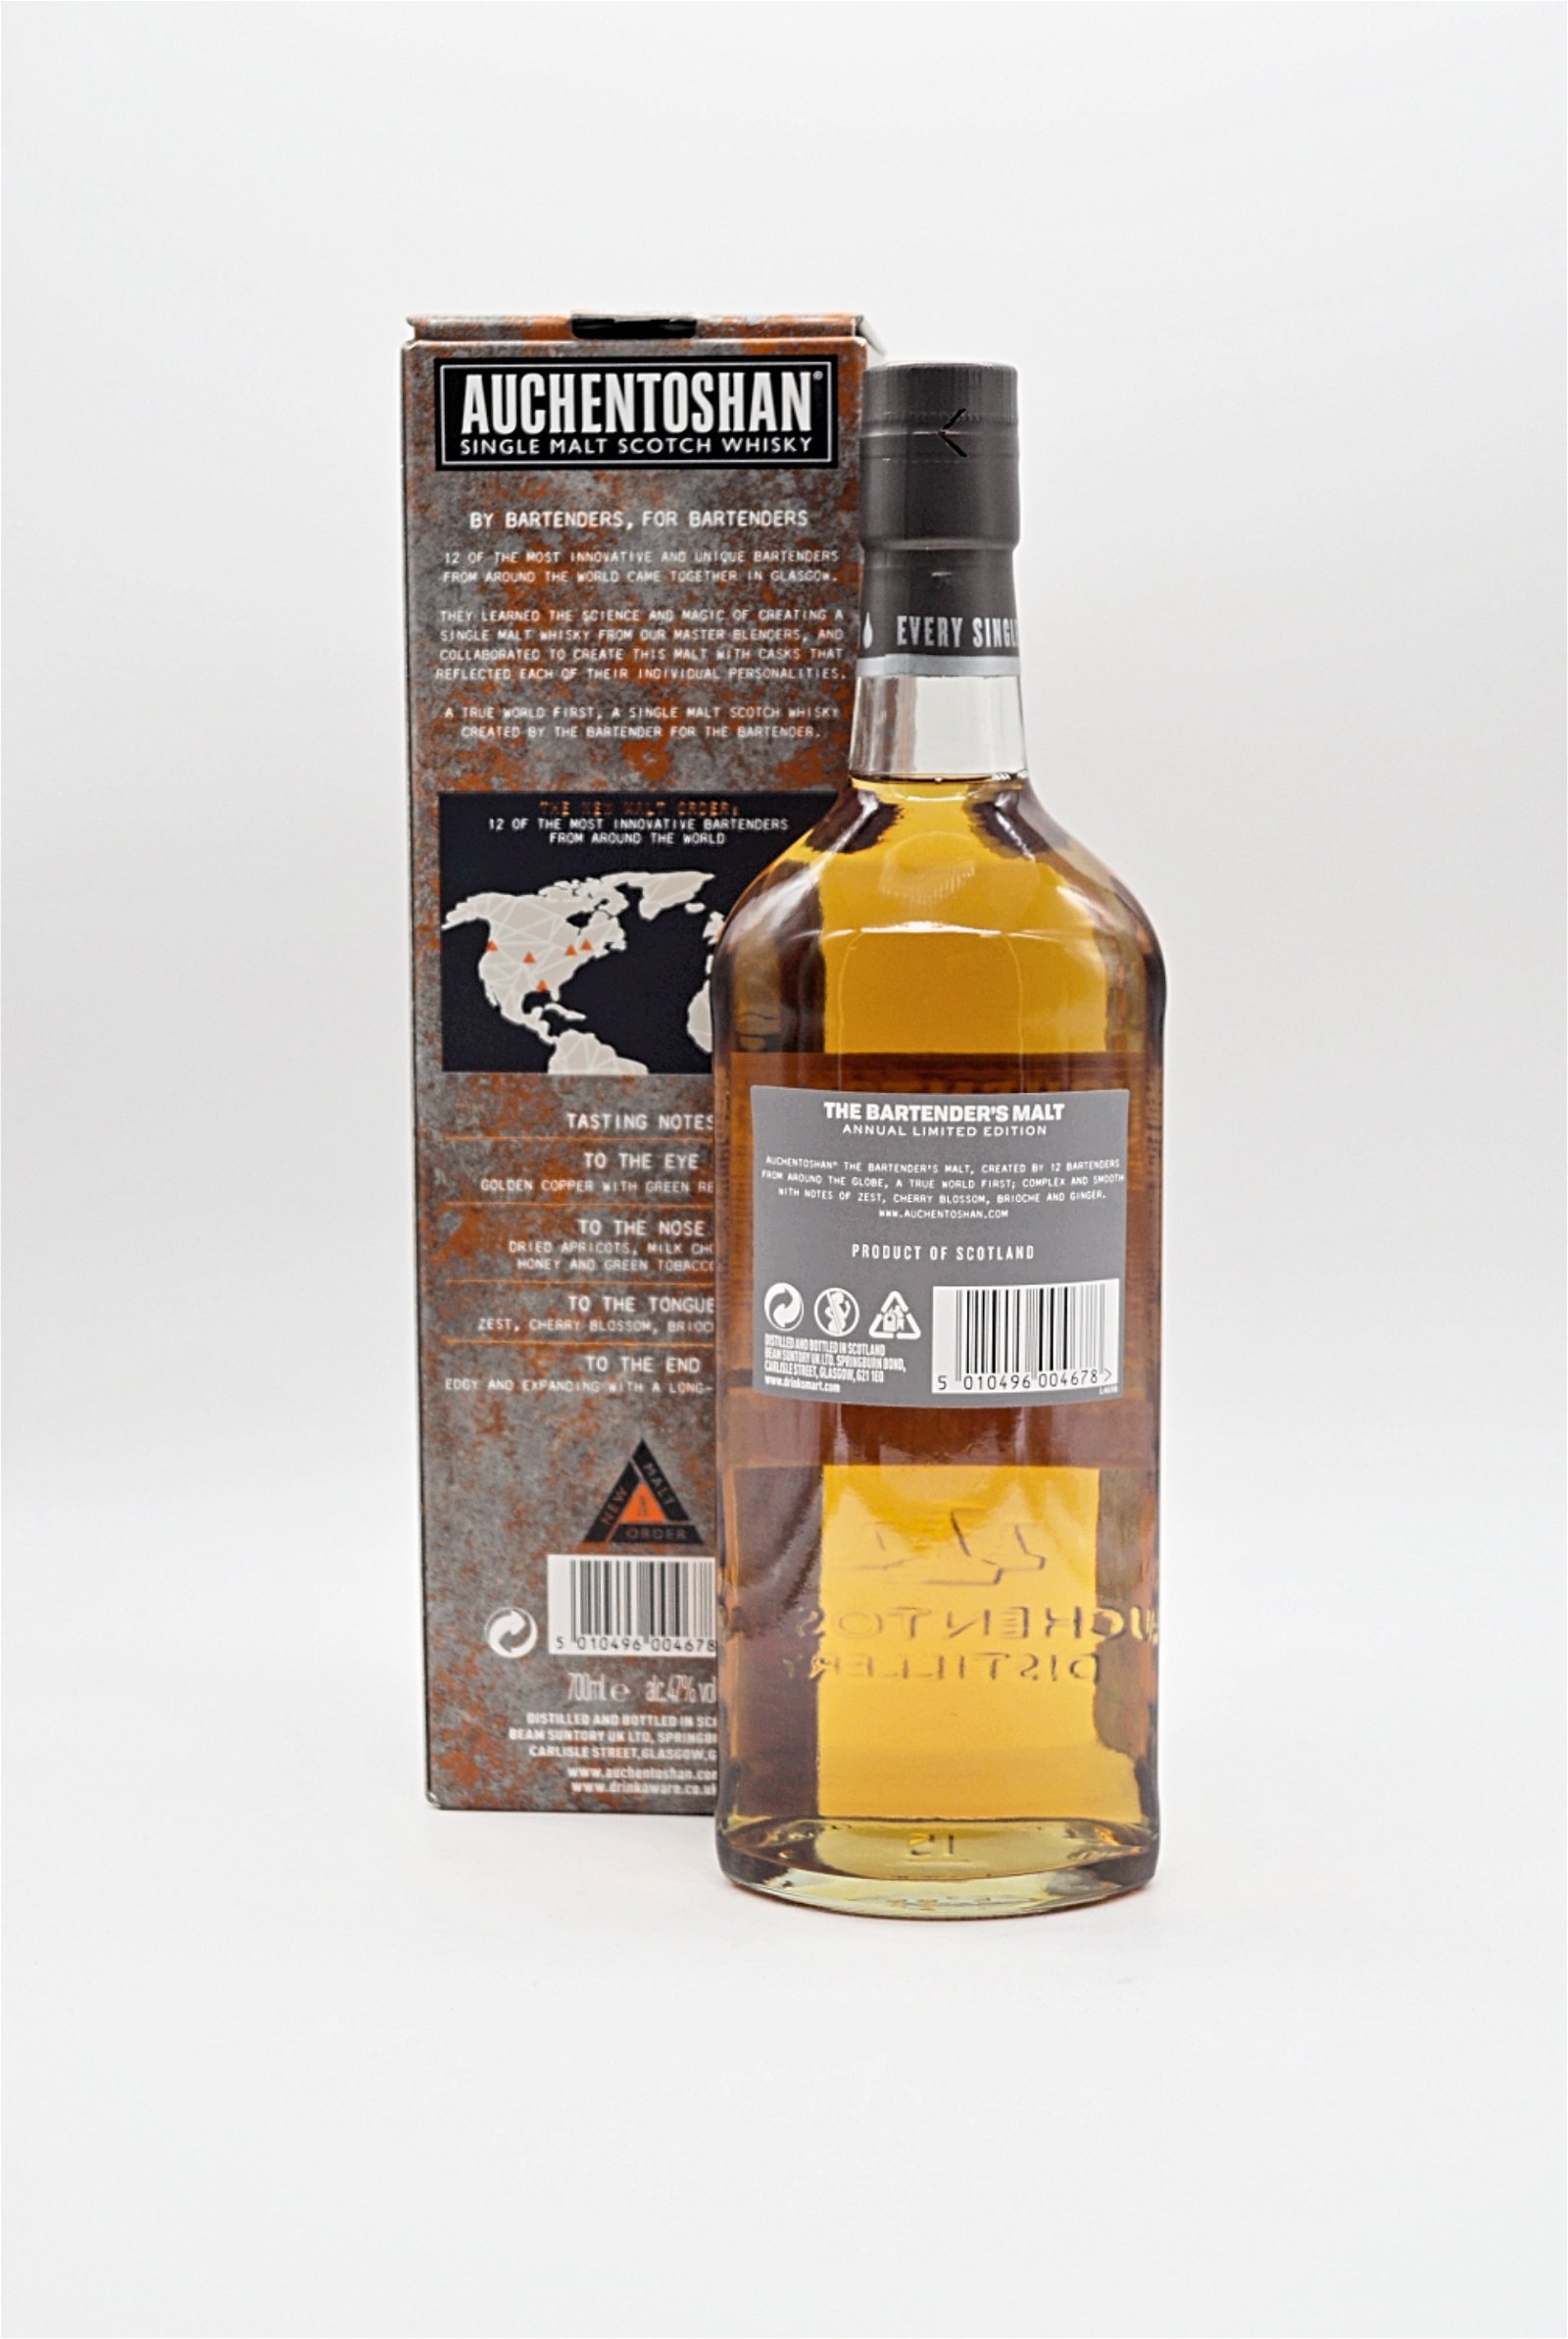 Auchentoshan The Bartenders Malt Annual Limited Edition 01 Single Malt Scotch Whisky